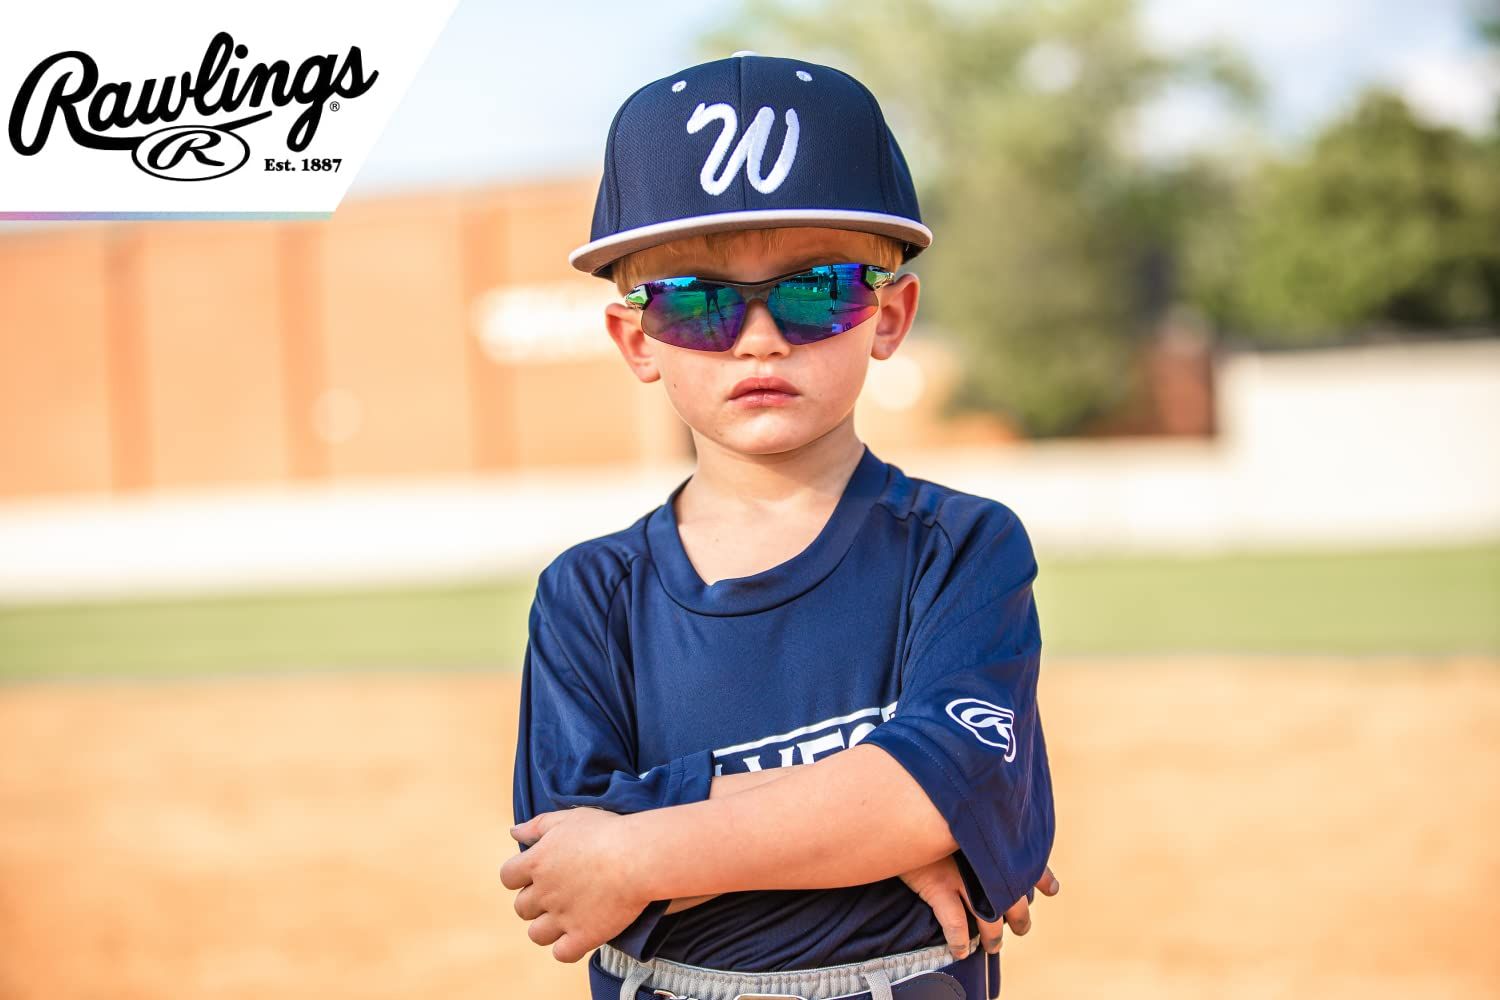 Rawlings Kids Sunglasses for Baseball and Softball Sunglasses - Several Colors - Stylish Shield Lenses - image 3 of 7